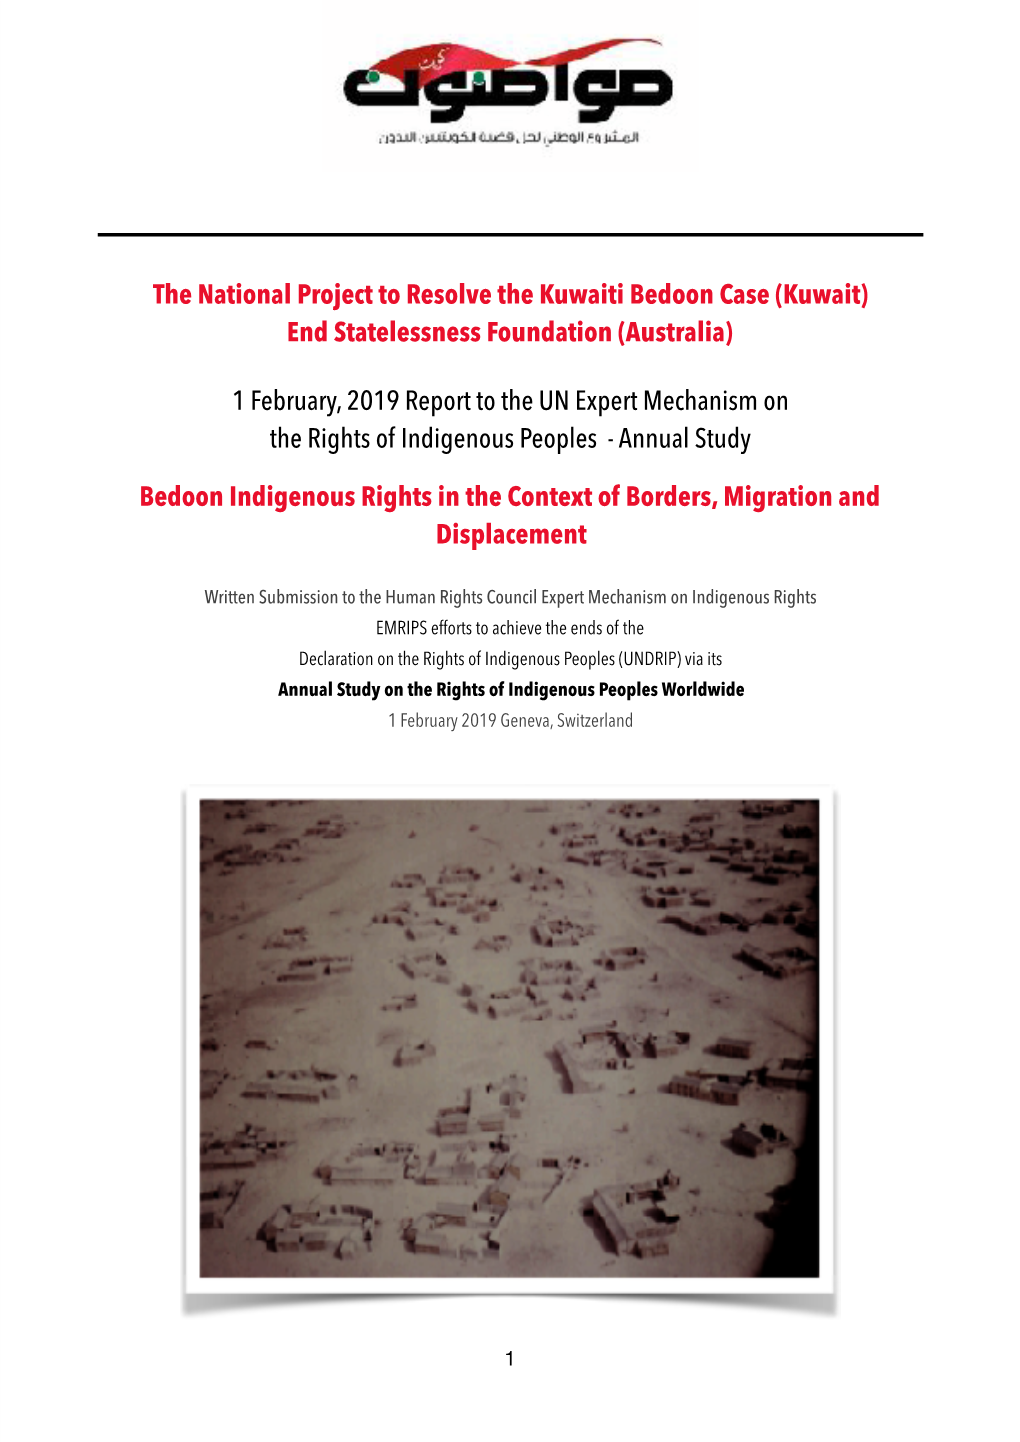 The National Project to Resolve the Kuwaiti Bedoon Case (Kuwait) End Statelessness Foundation (Australia)